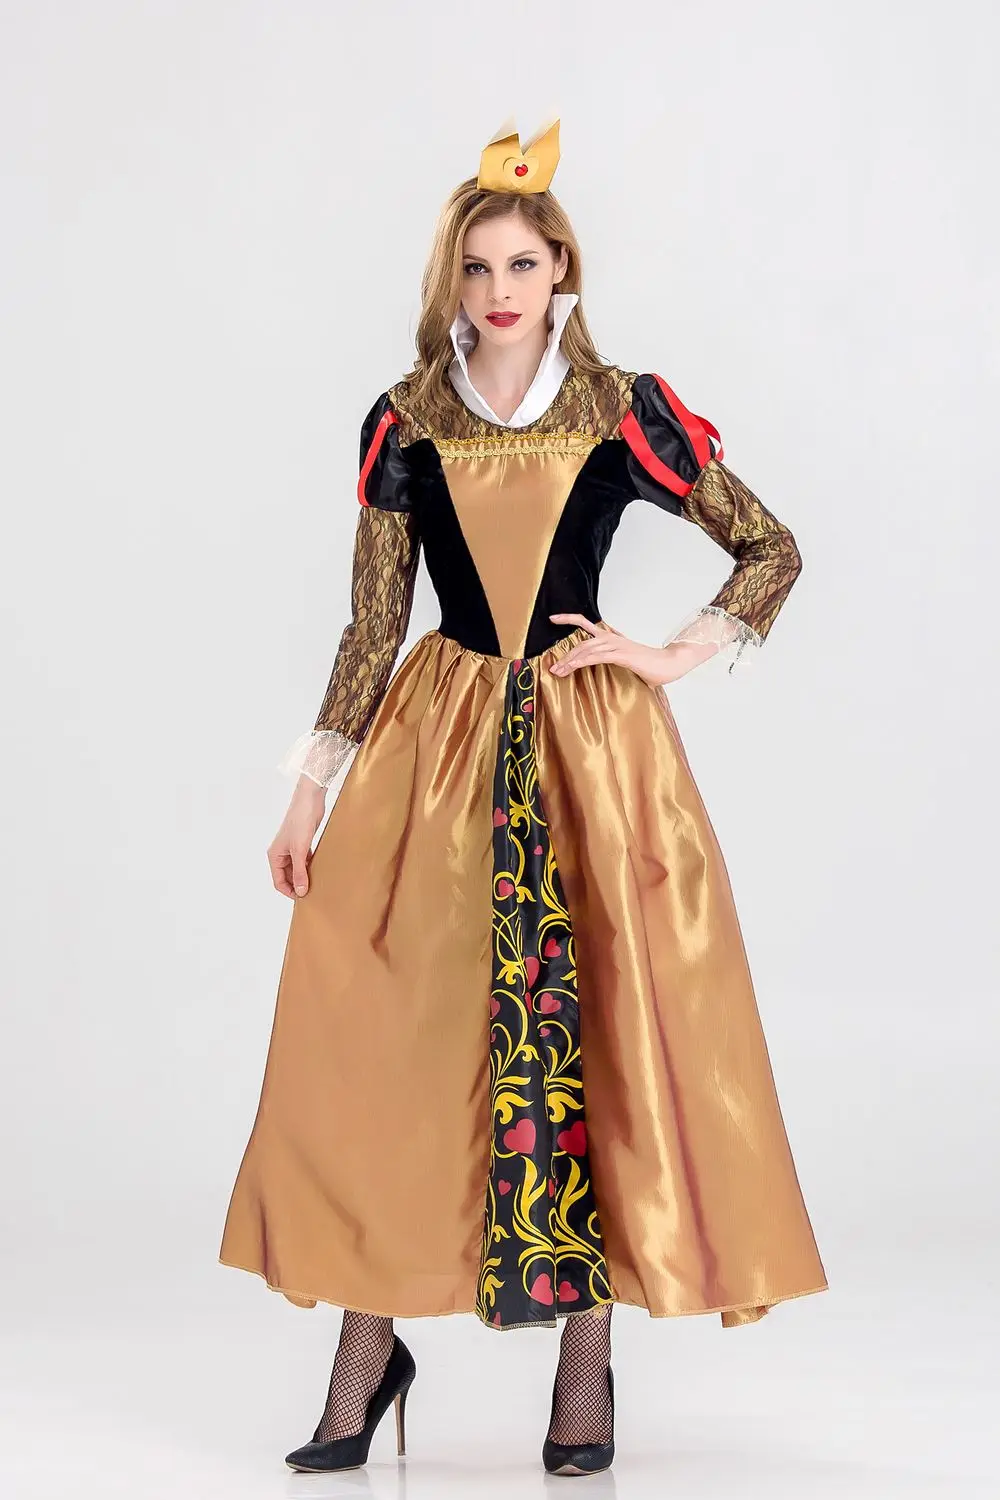 Sweetheart Queen Costumes Women Masquerade Party Deluxe Princess Fancy Dress